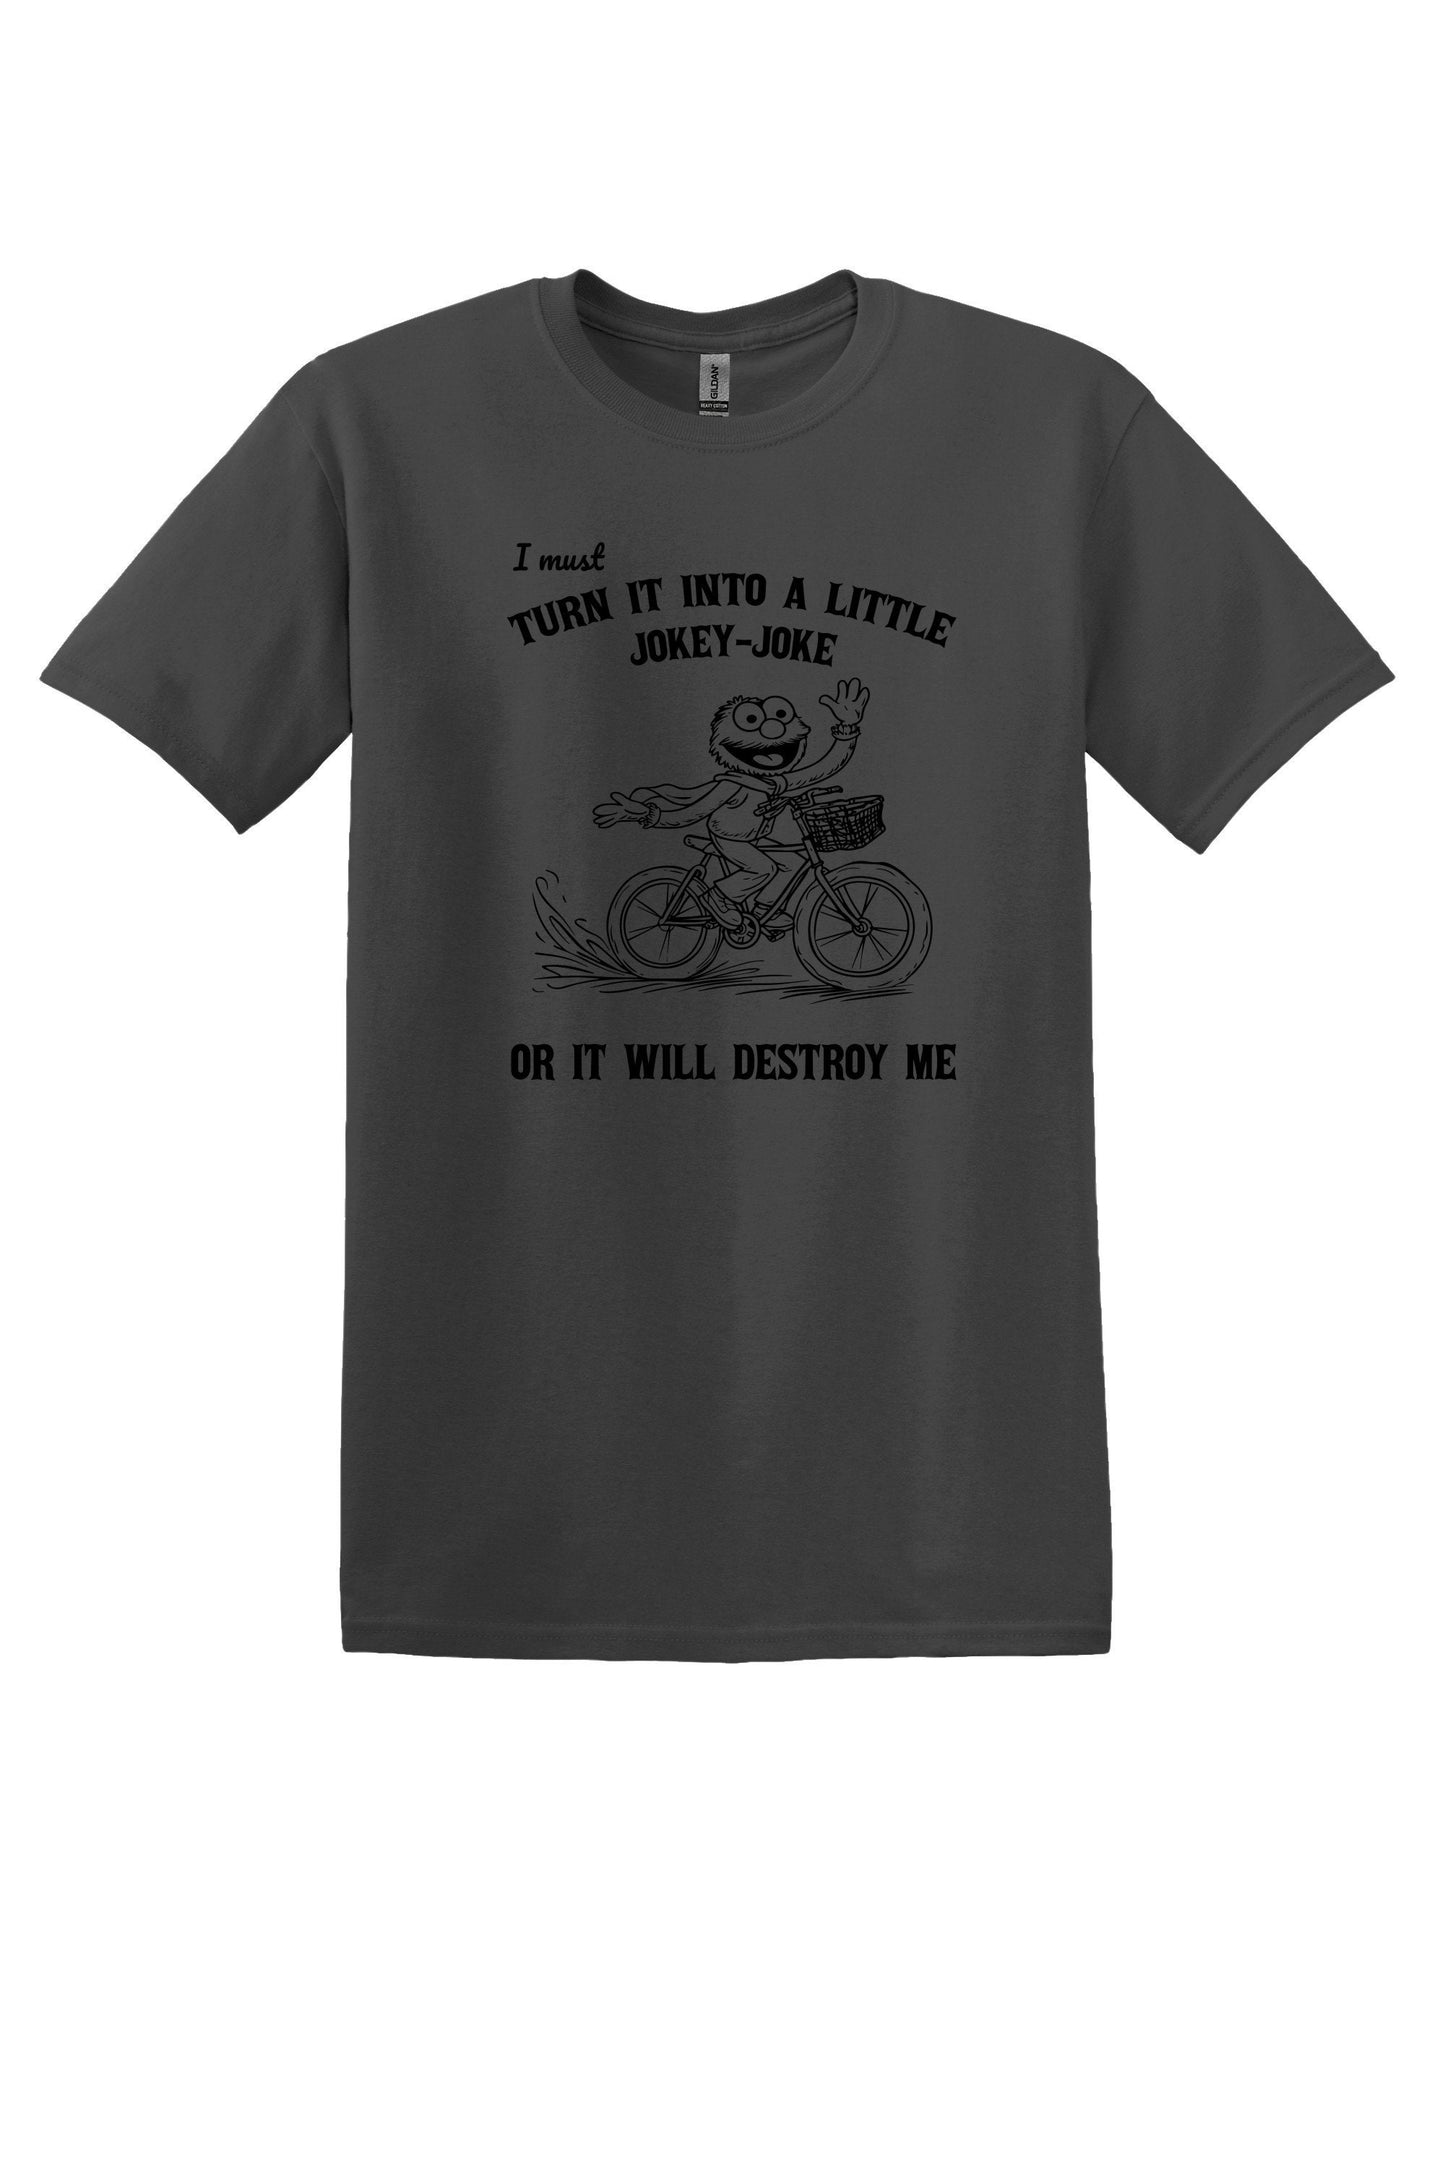 I Must Turn it into a Little Jokey Joke TShirt Graphic Shirt Funny Adult T-Shirt Vintage Funny TShirt Nostalgia T-Shirt Relaxed Cotton Tee